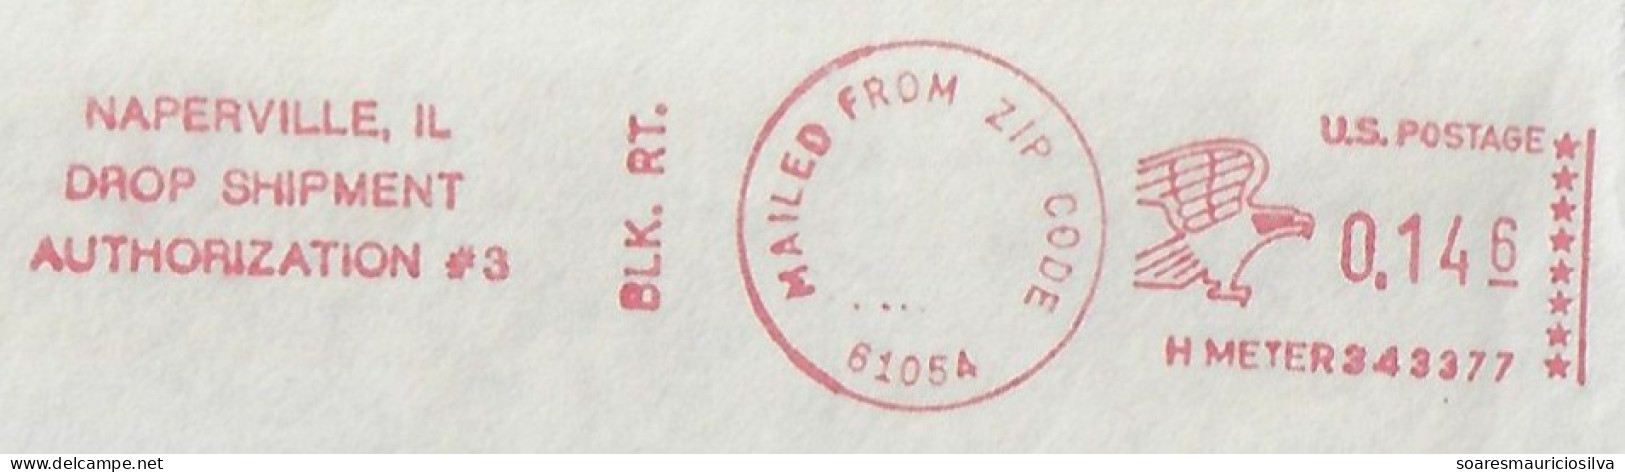 USA 1990s Cover Fragment Meter Stamp Hasler Slogan Naperville Illinois Drop Shipment Authorization # 3 Bulk Rate - Storia Postale